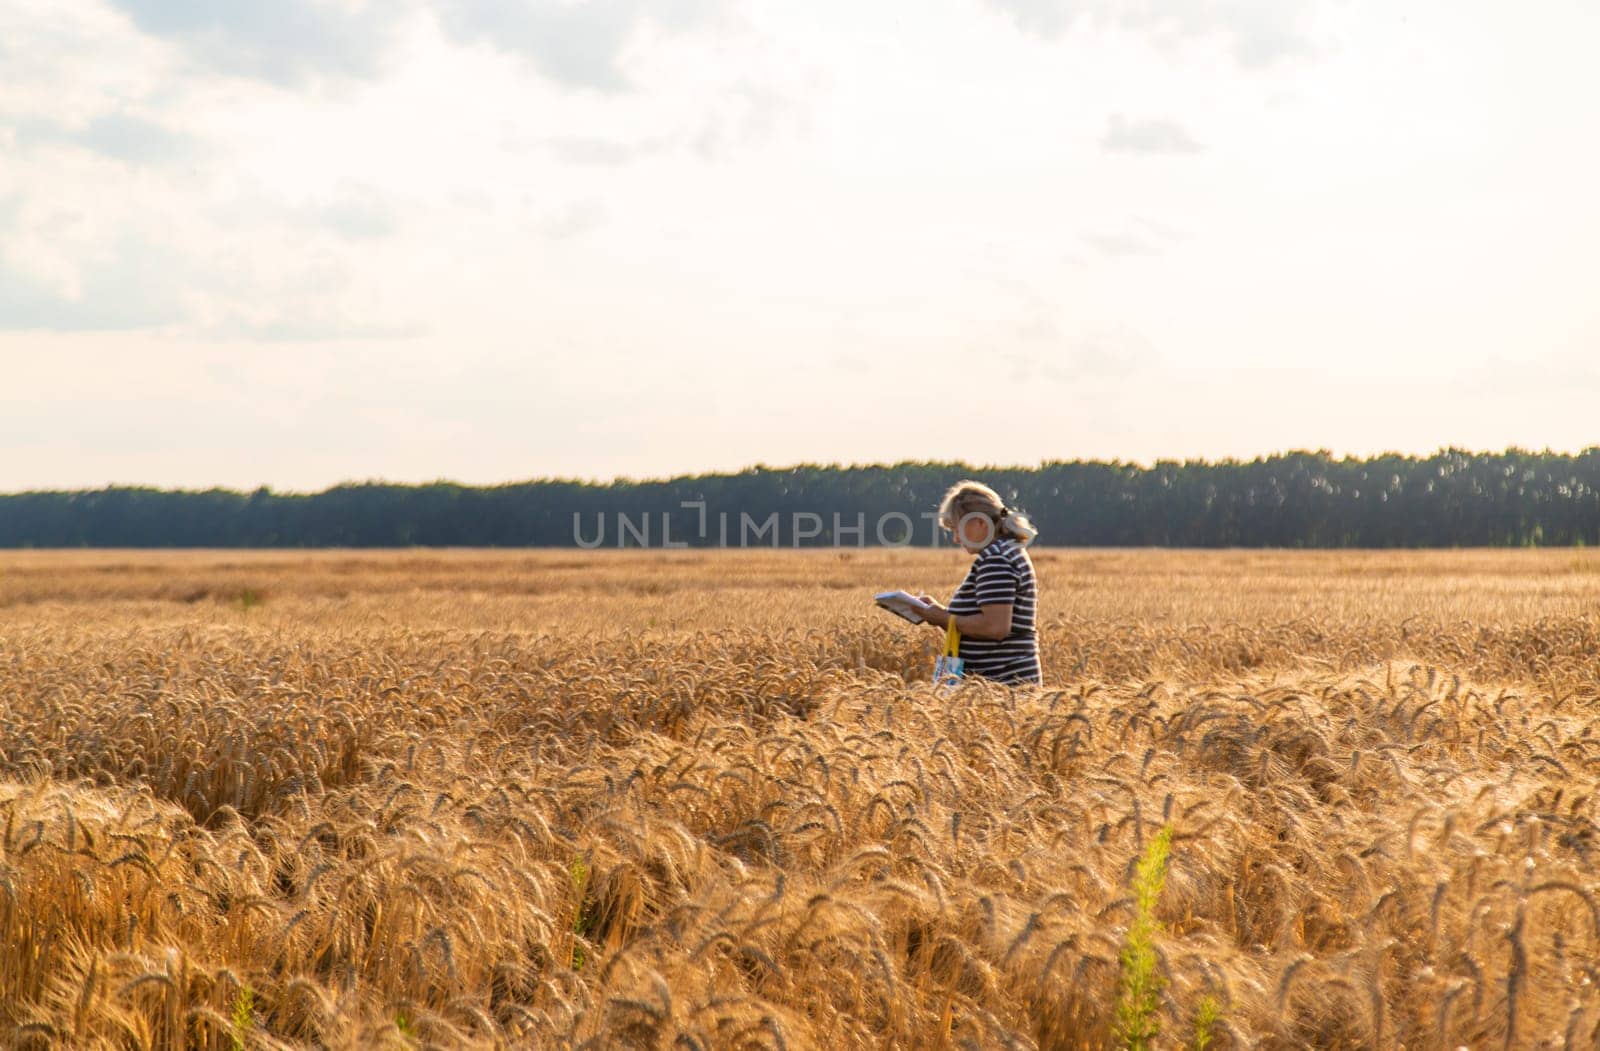 A farmer in a field of wheat checks. Selective focus. by yanadjana